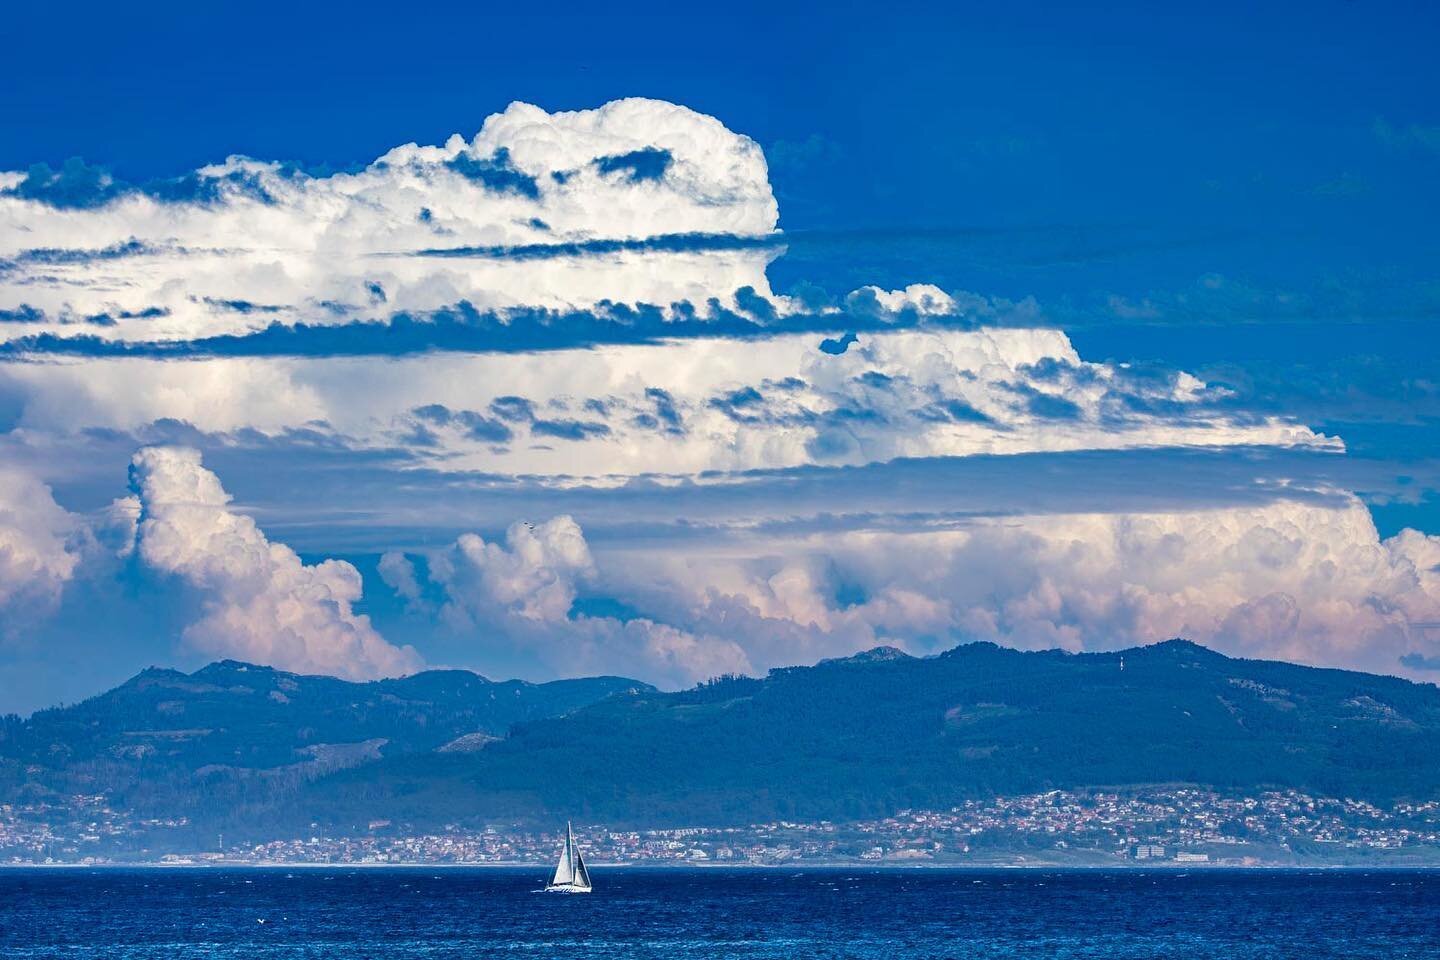 Summer storm clouds build above the mountains behind the city of Vigo in Galicia, Spain. 
.
.
. 
.
. 
@spain #galicia #muxia #spring #travel #sailing @travellerau #espa&ntilde;a #sailinglife #experiencegalicia #travellerau ⁠
#travelgram #wanderlust #